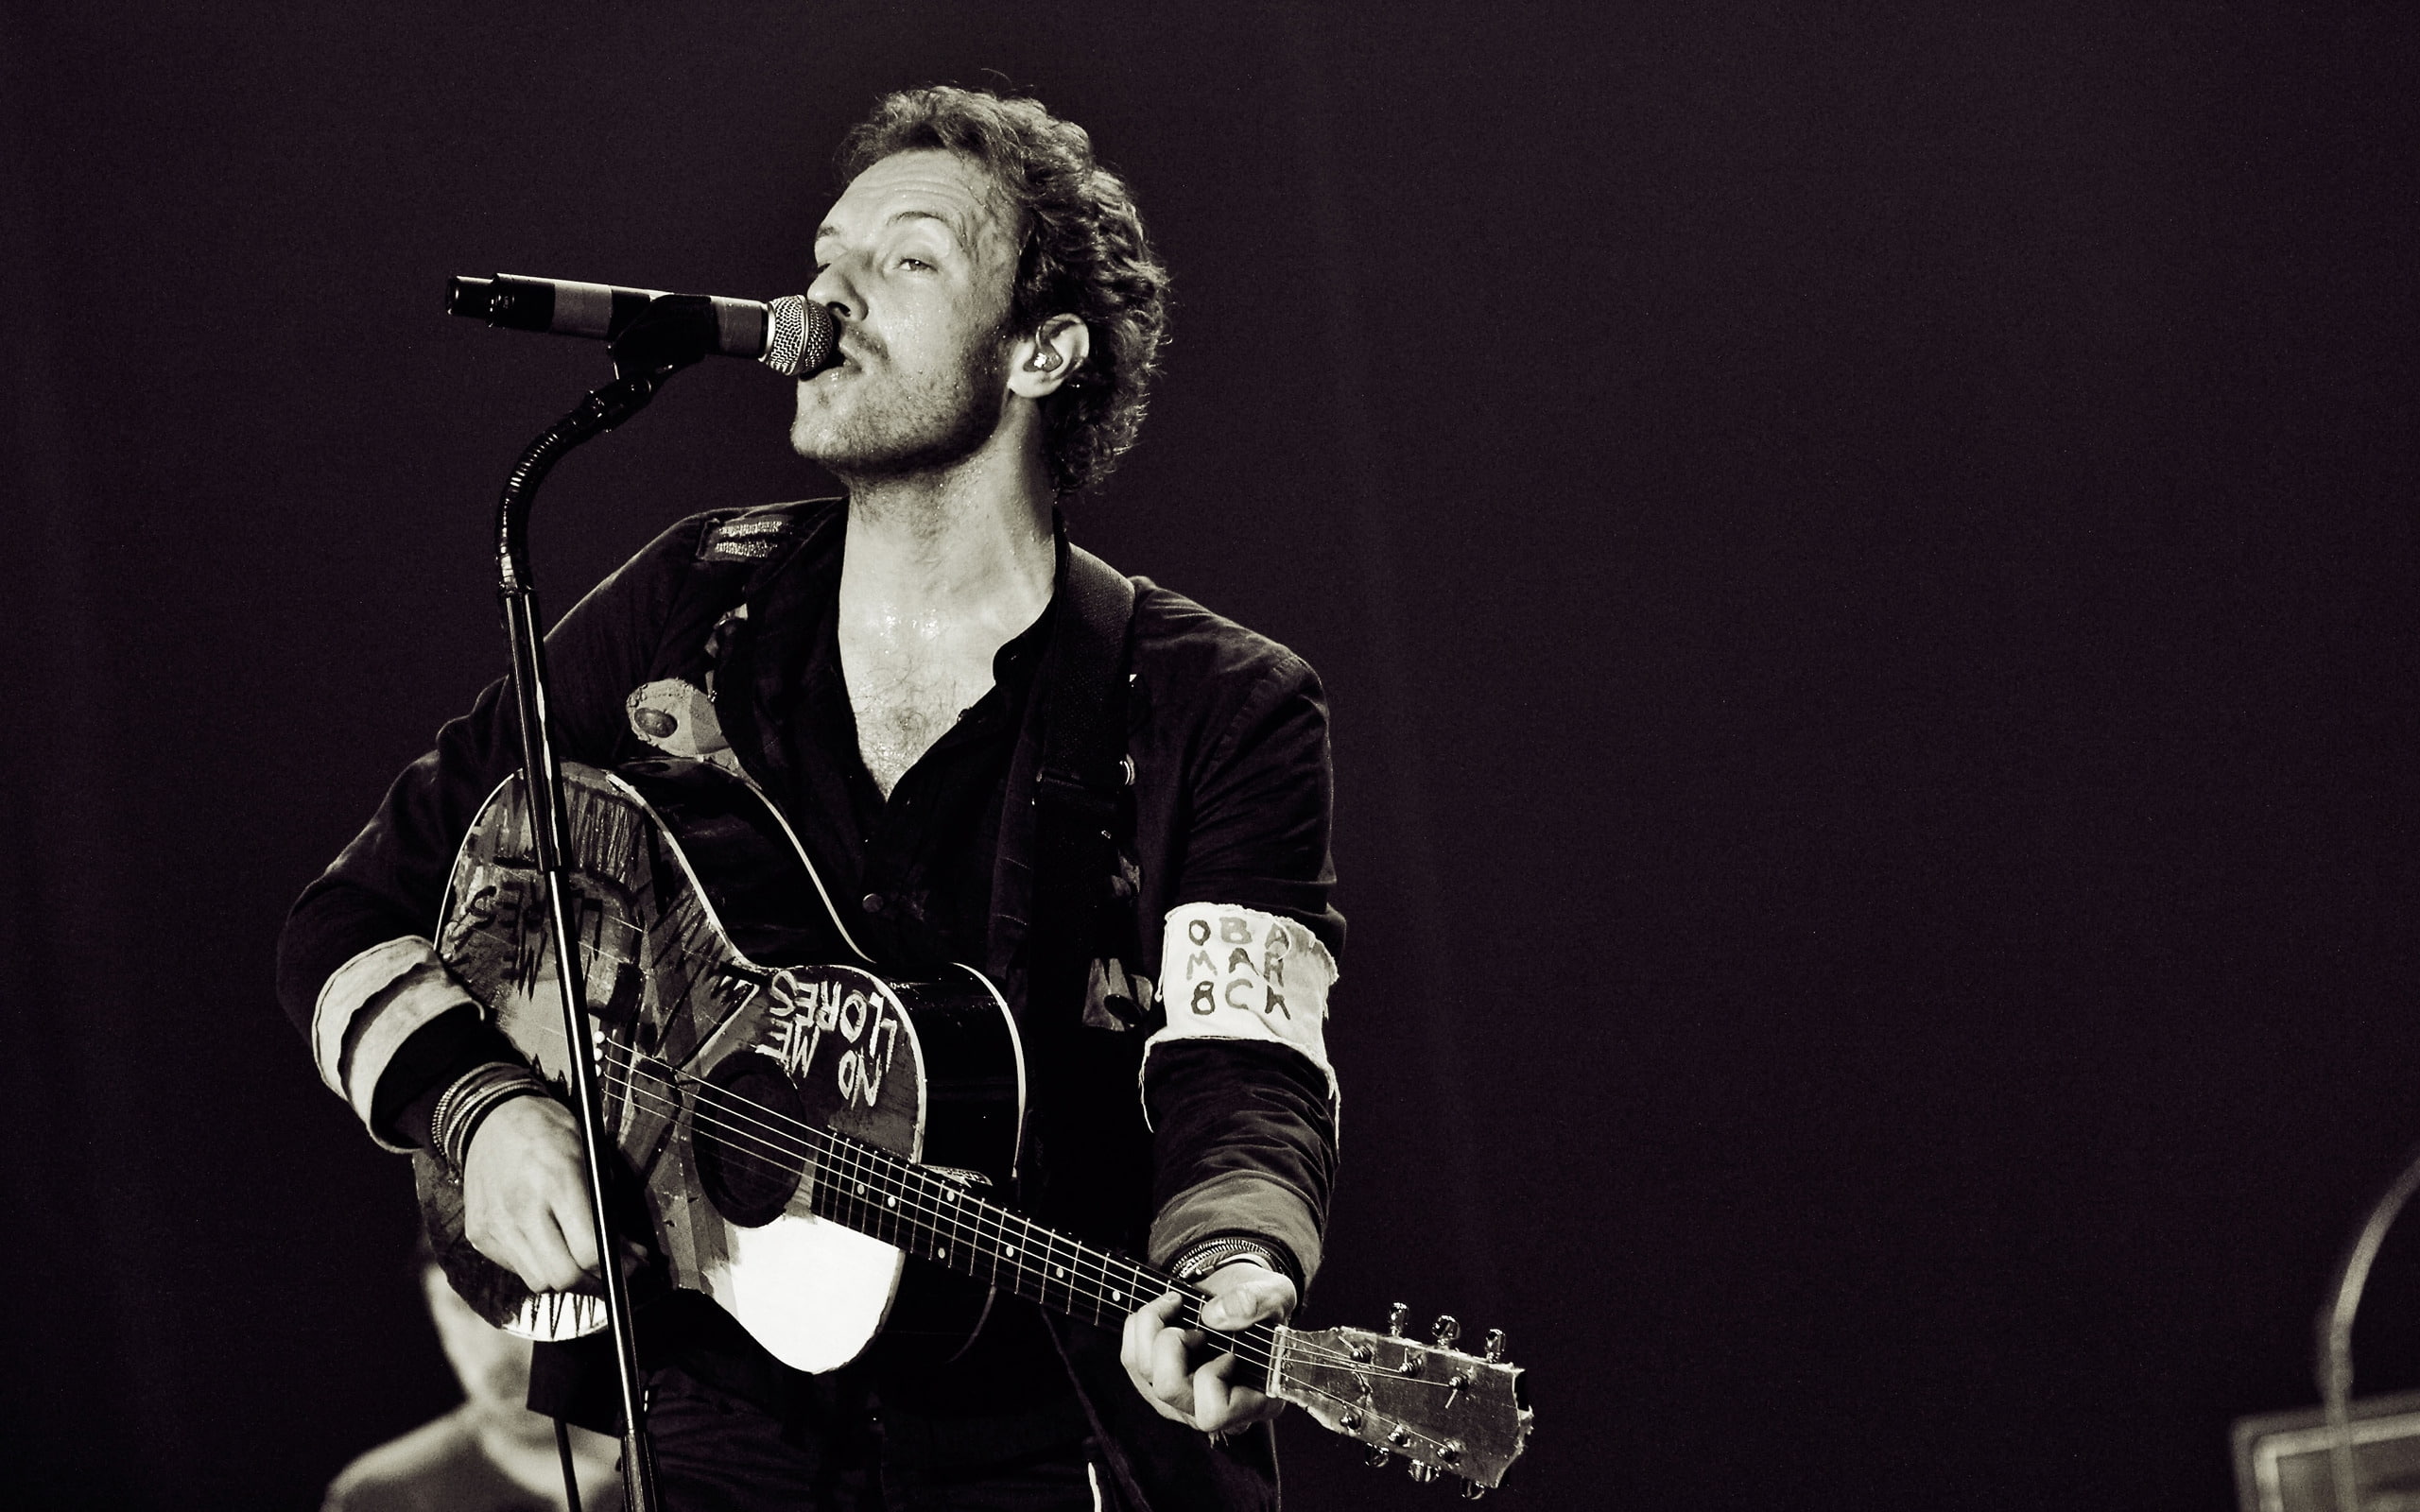 Chris Martin Coldplay, singer